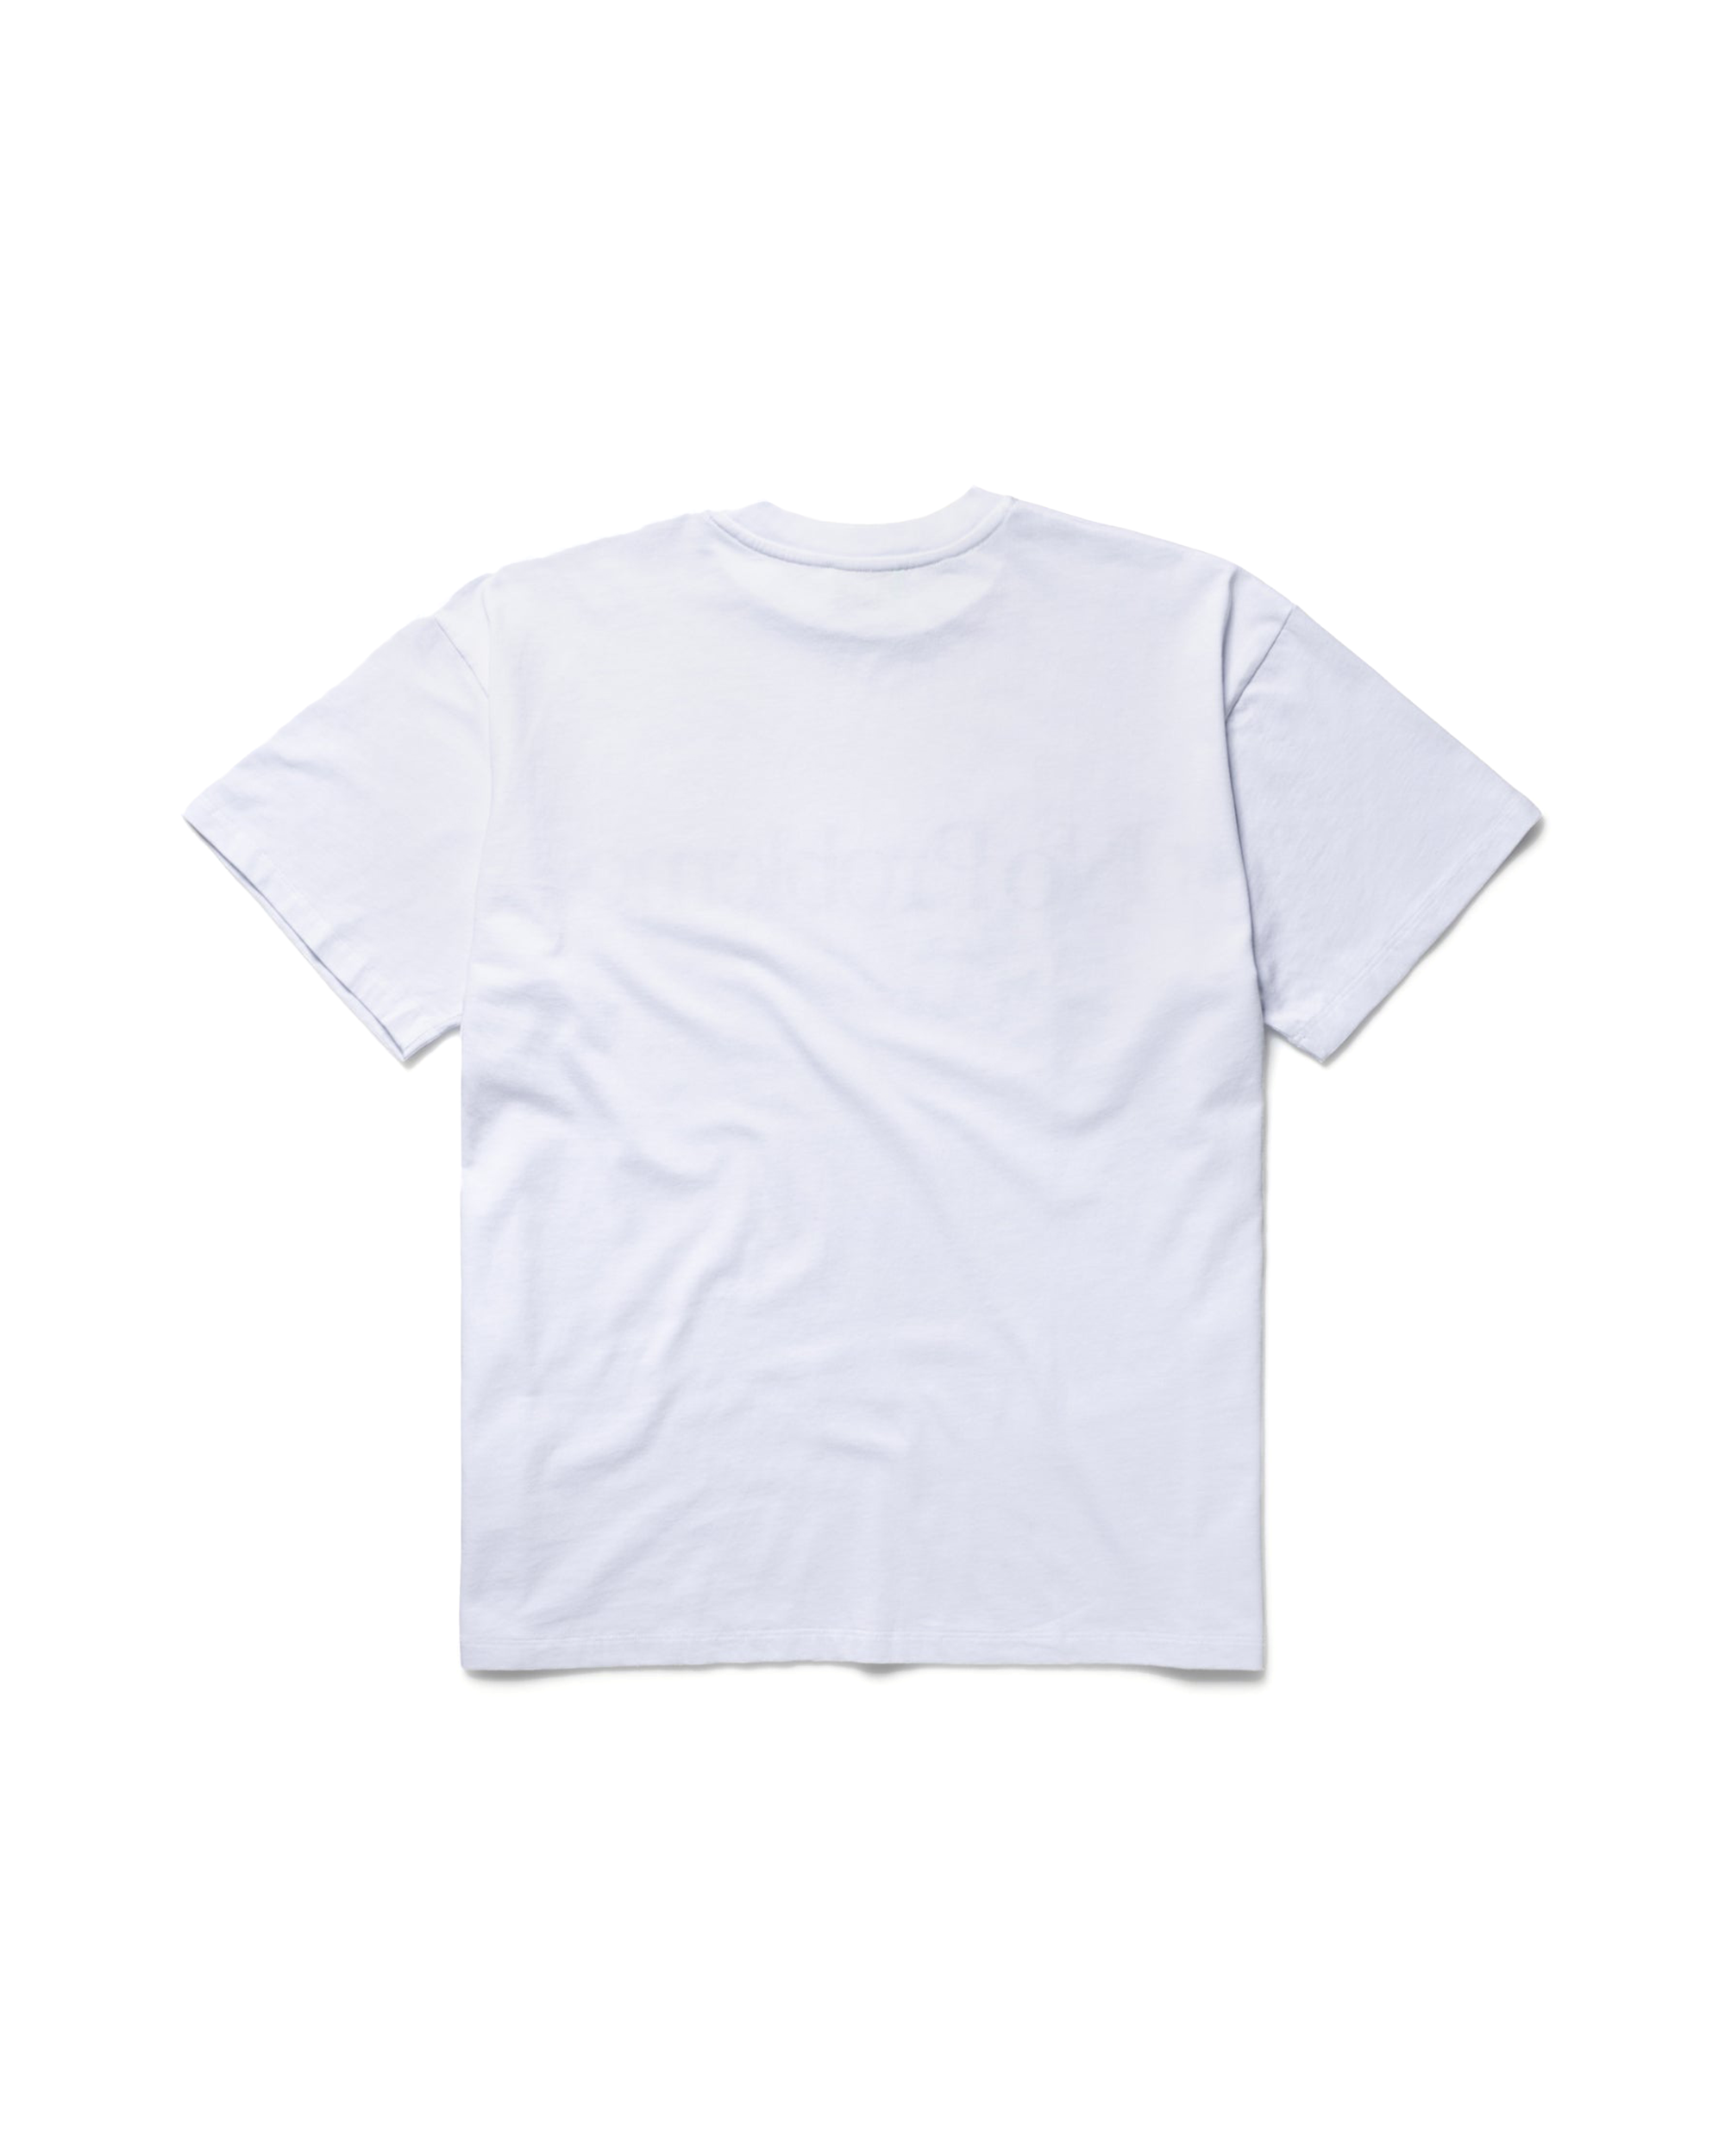 Temple T-Shirt - White